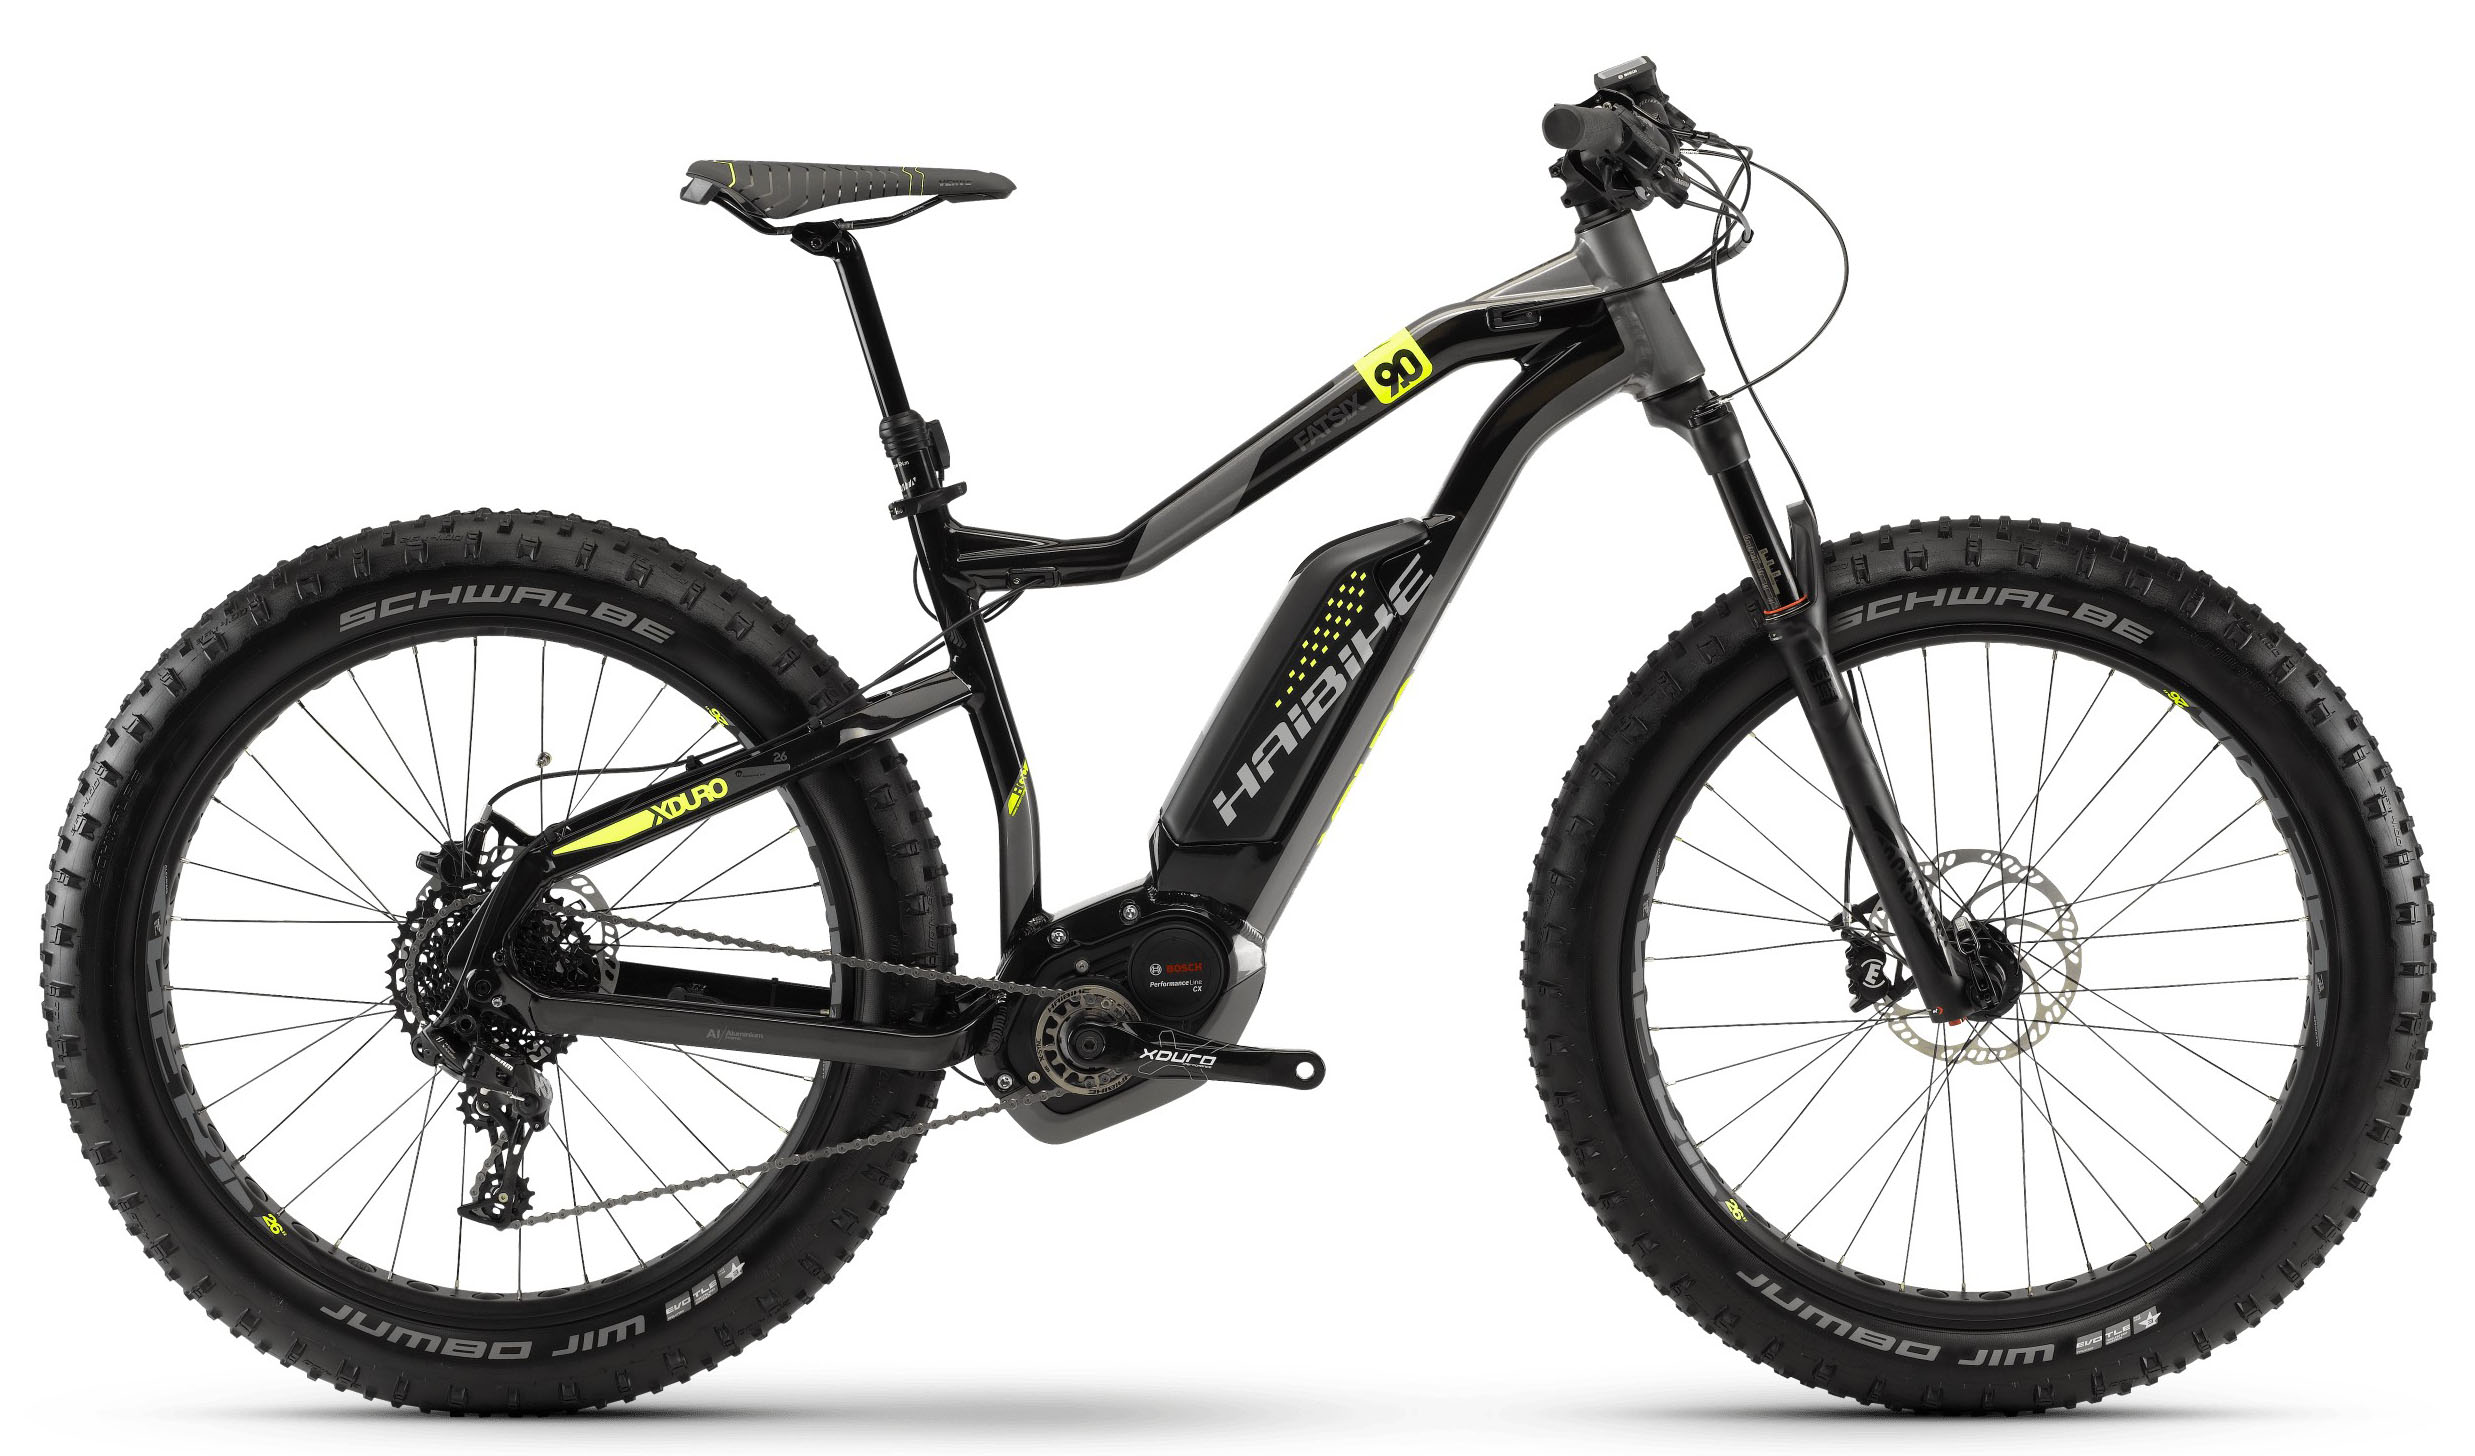  Велосипед Haibike Xduro FatSix 9.0 500Wh 11s NX 2018